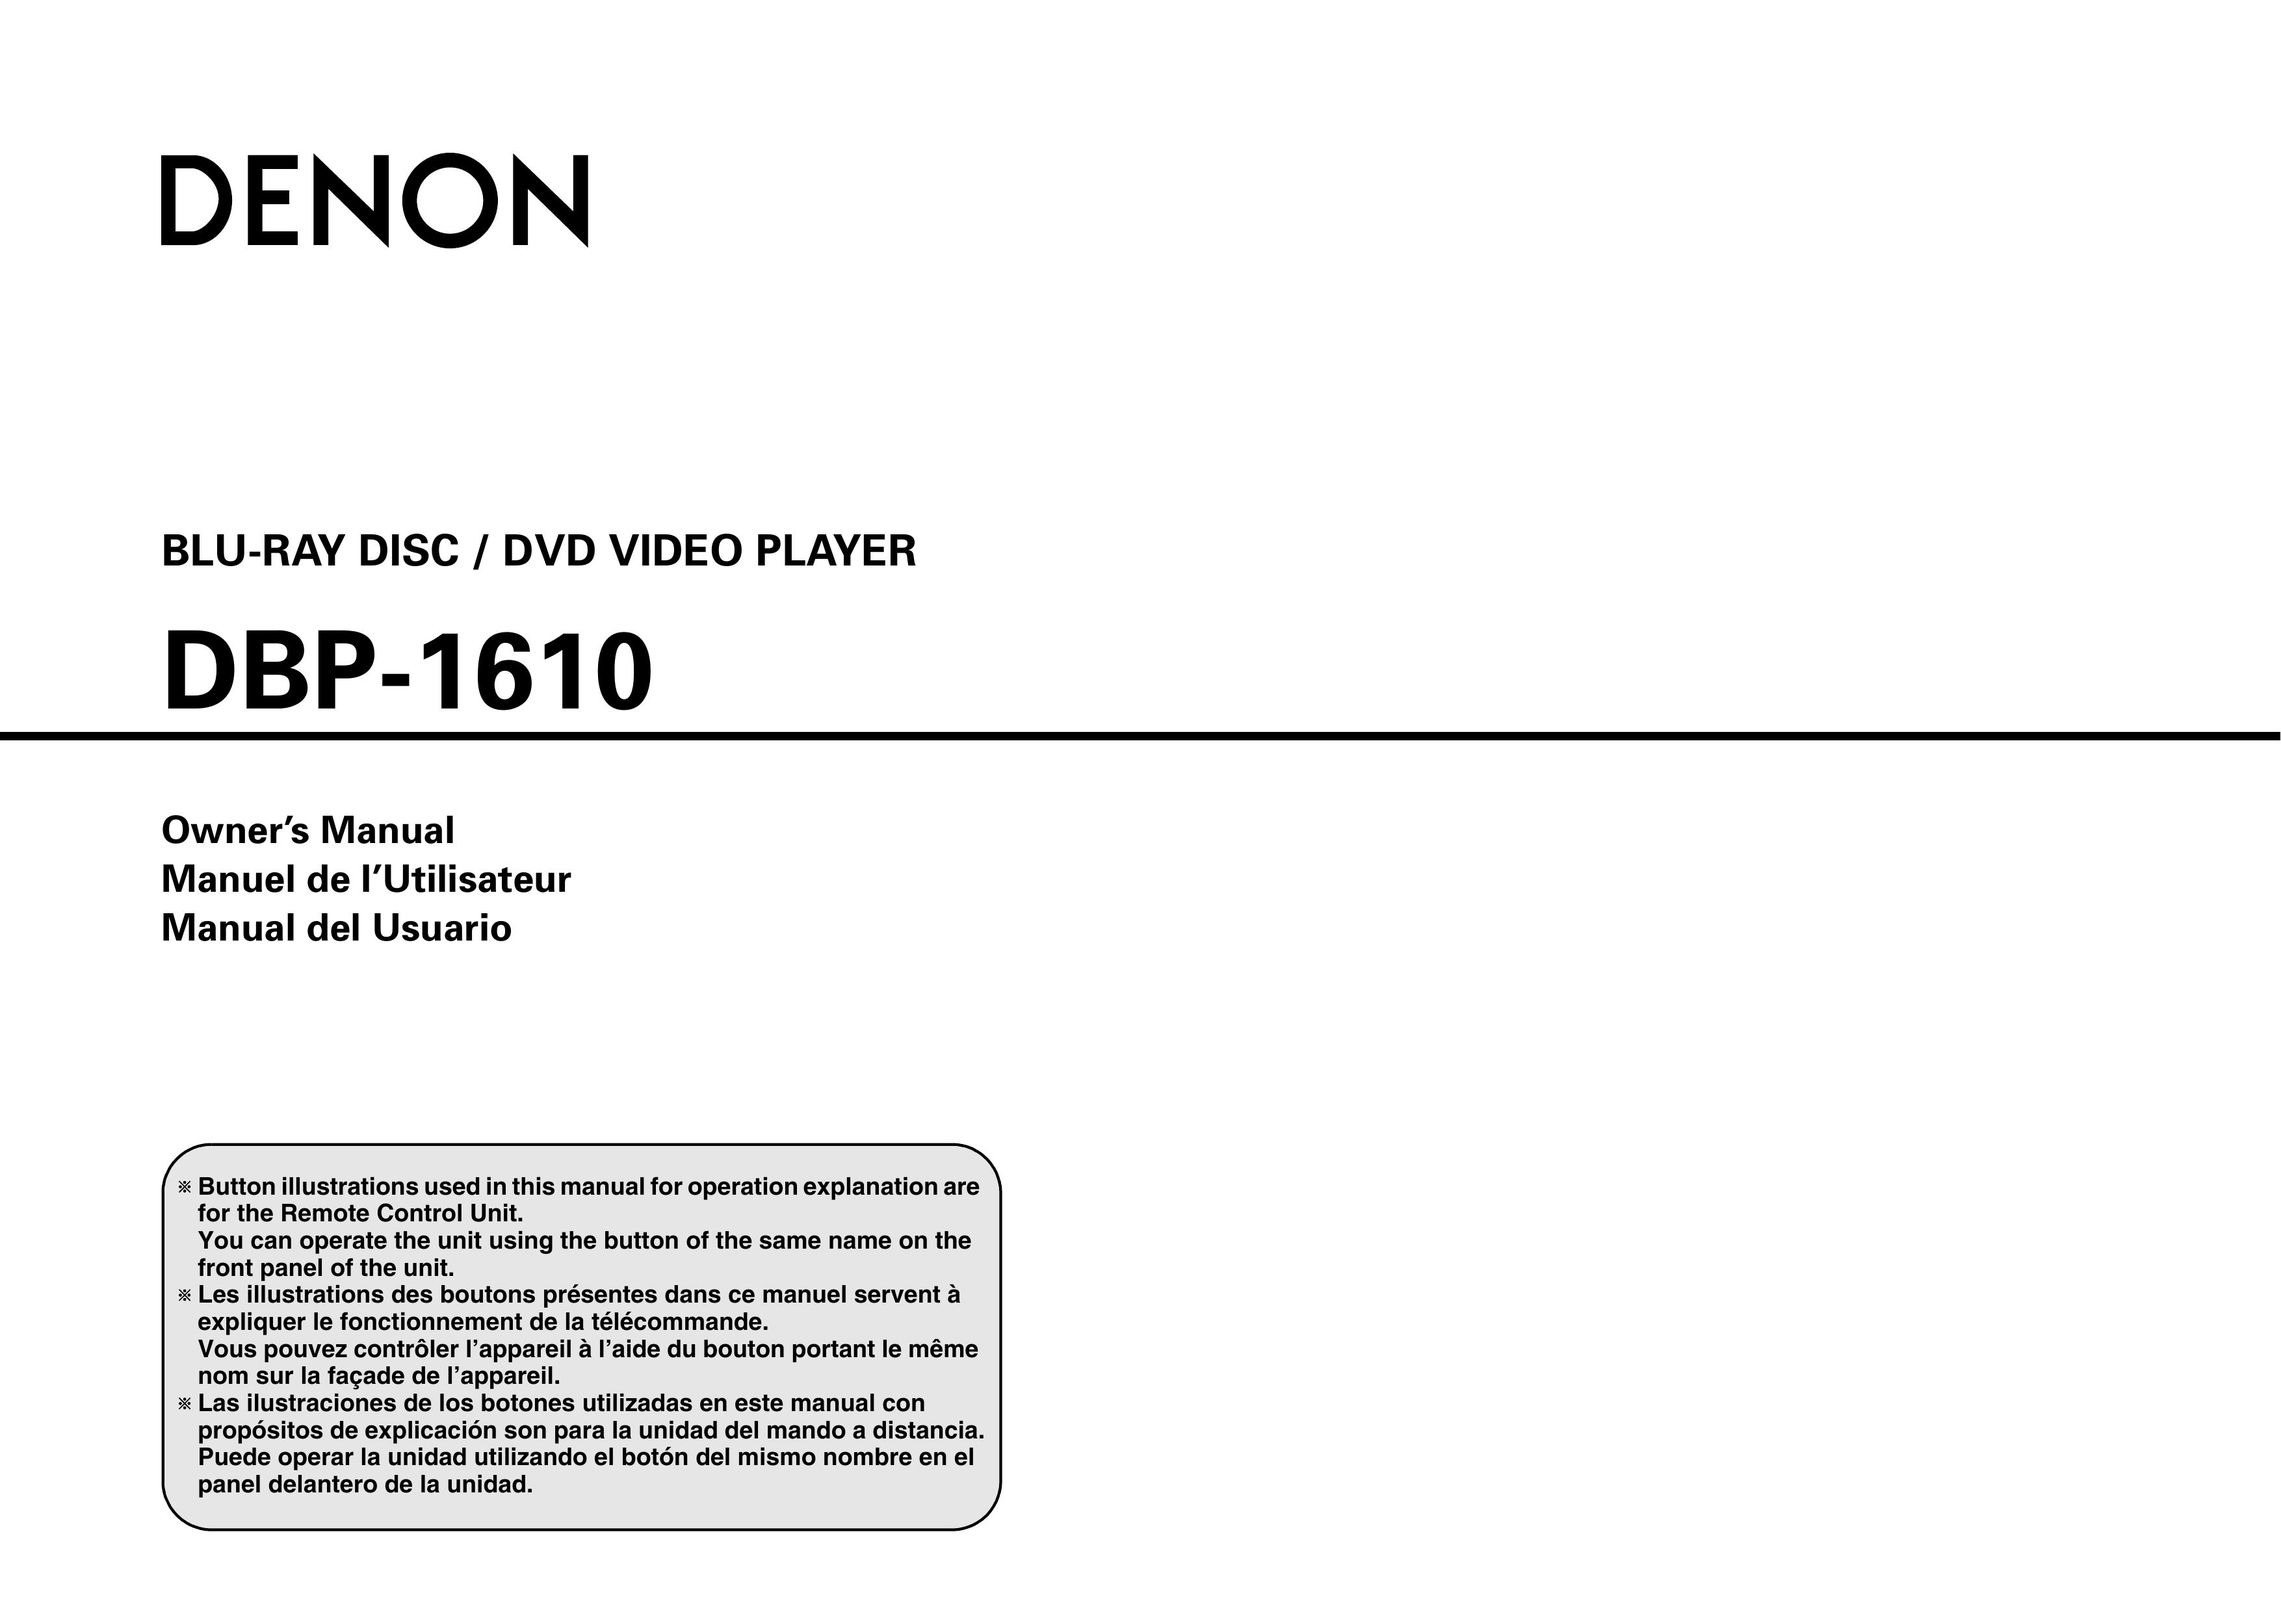 Univex DBP-1610 Blu-ray Player User Manual